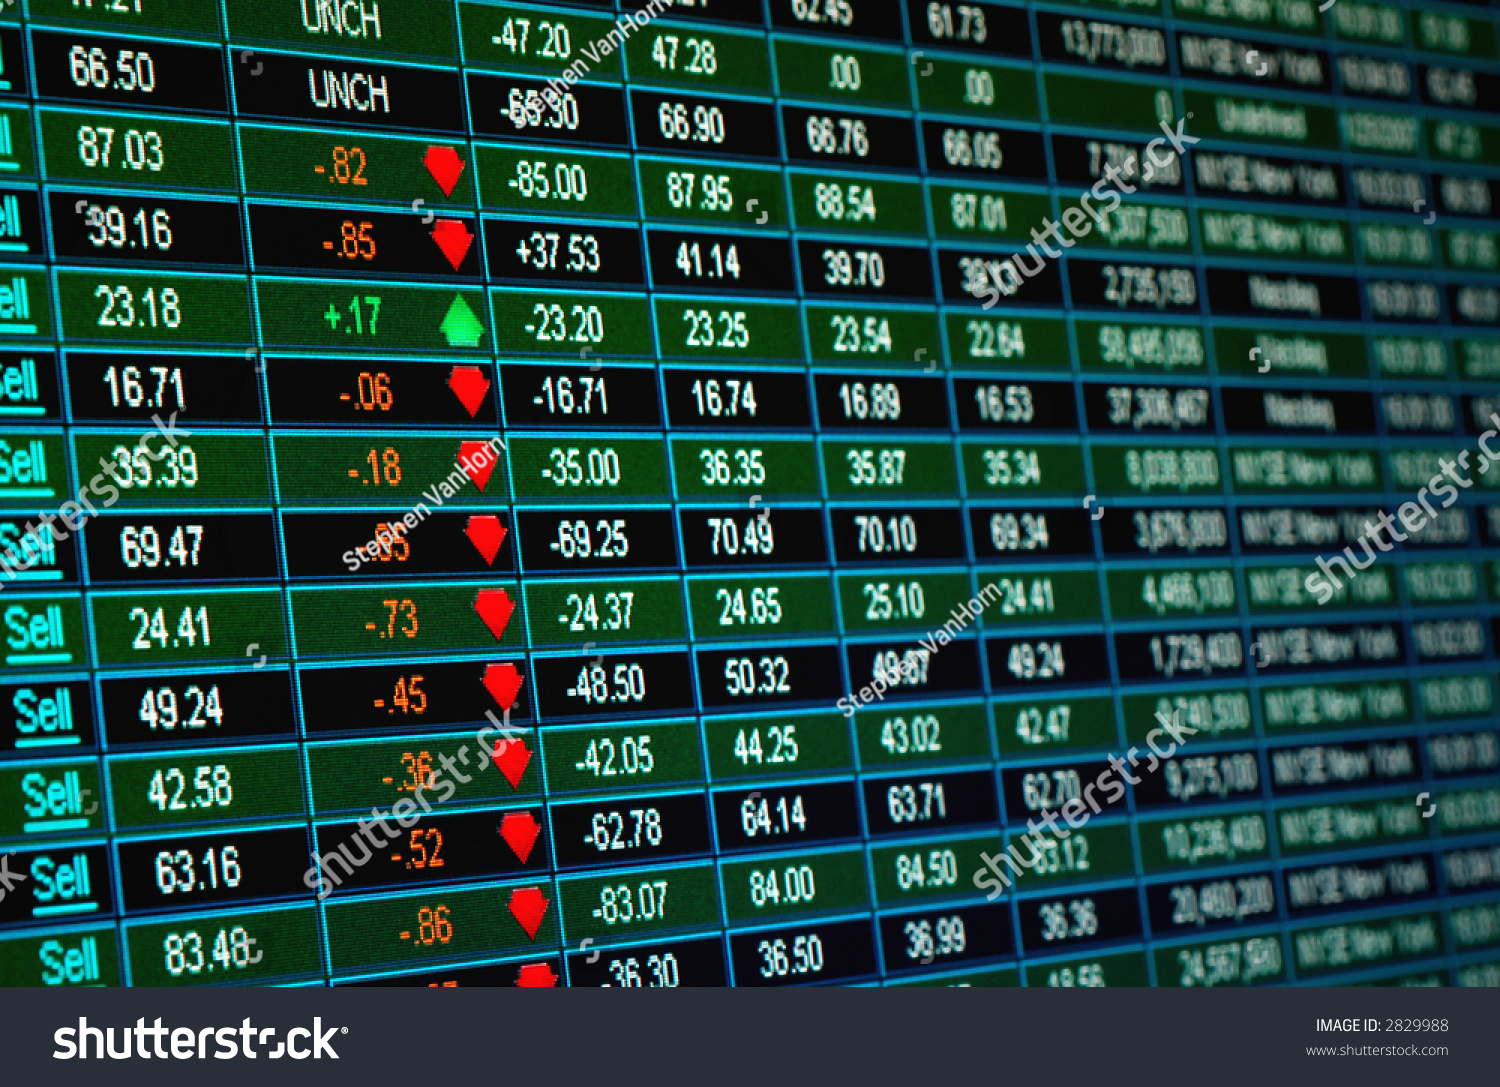 stock market quotes database